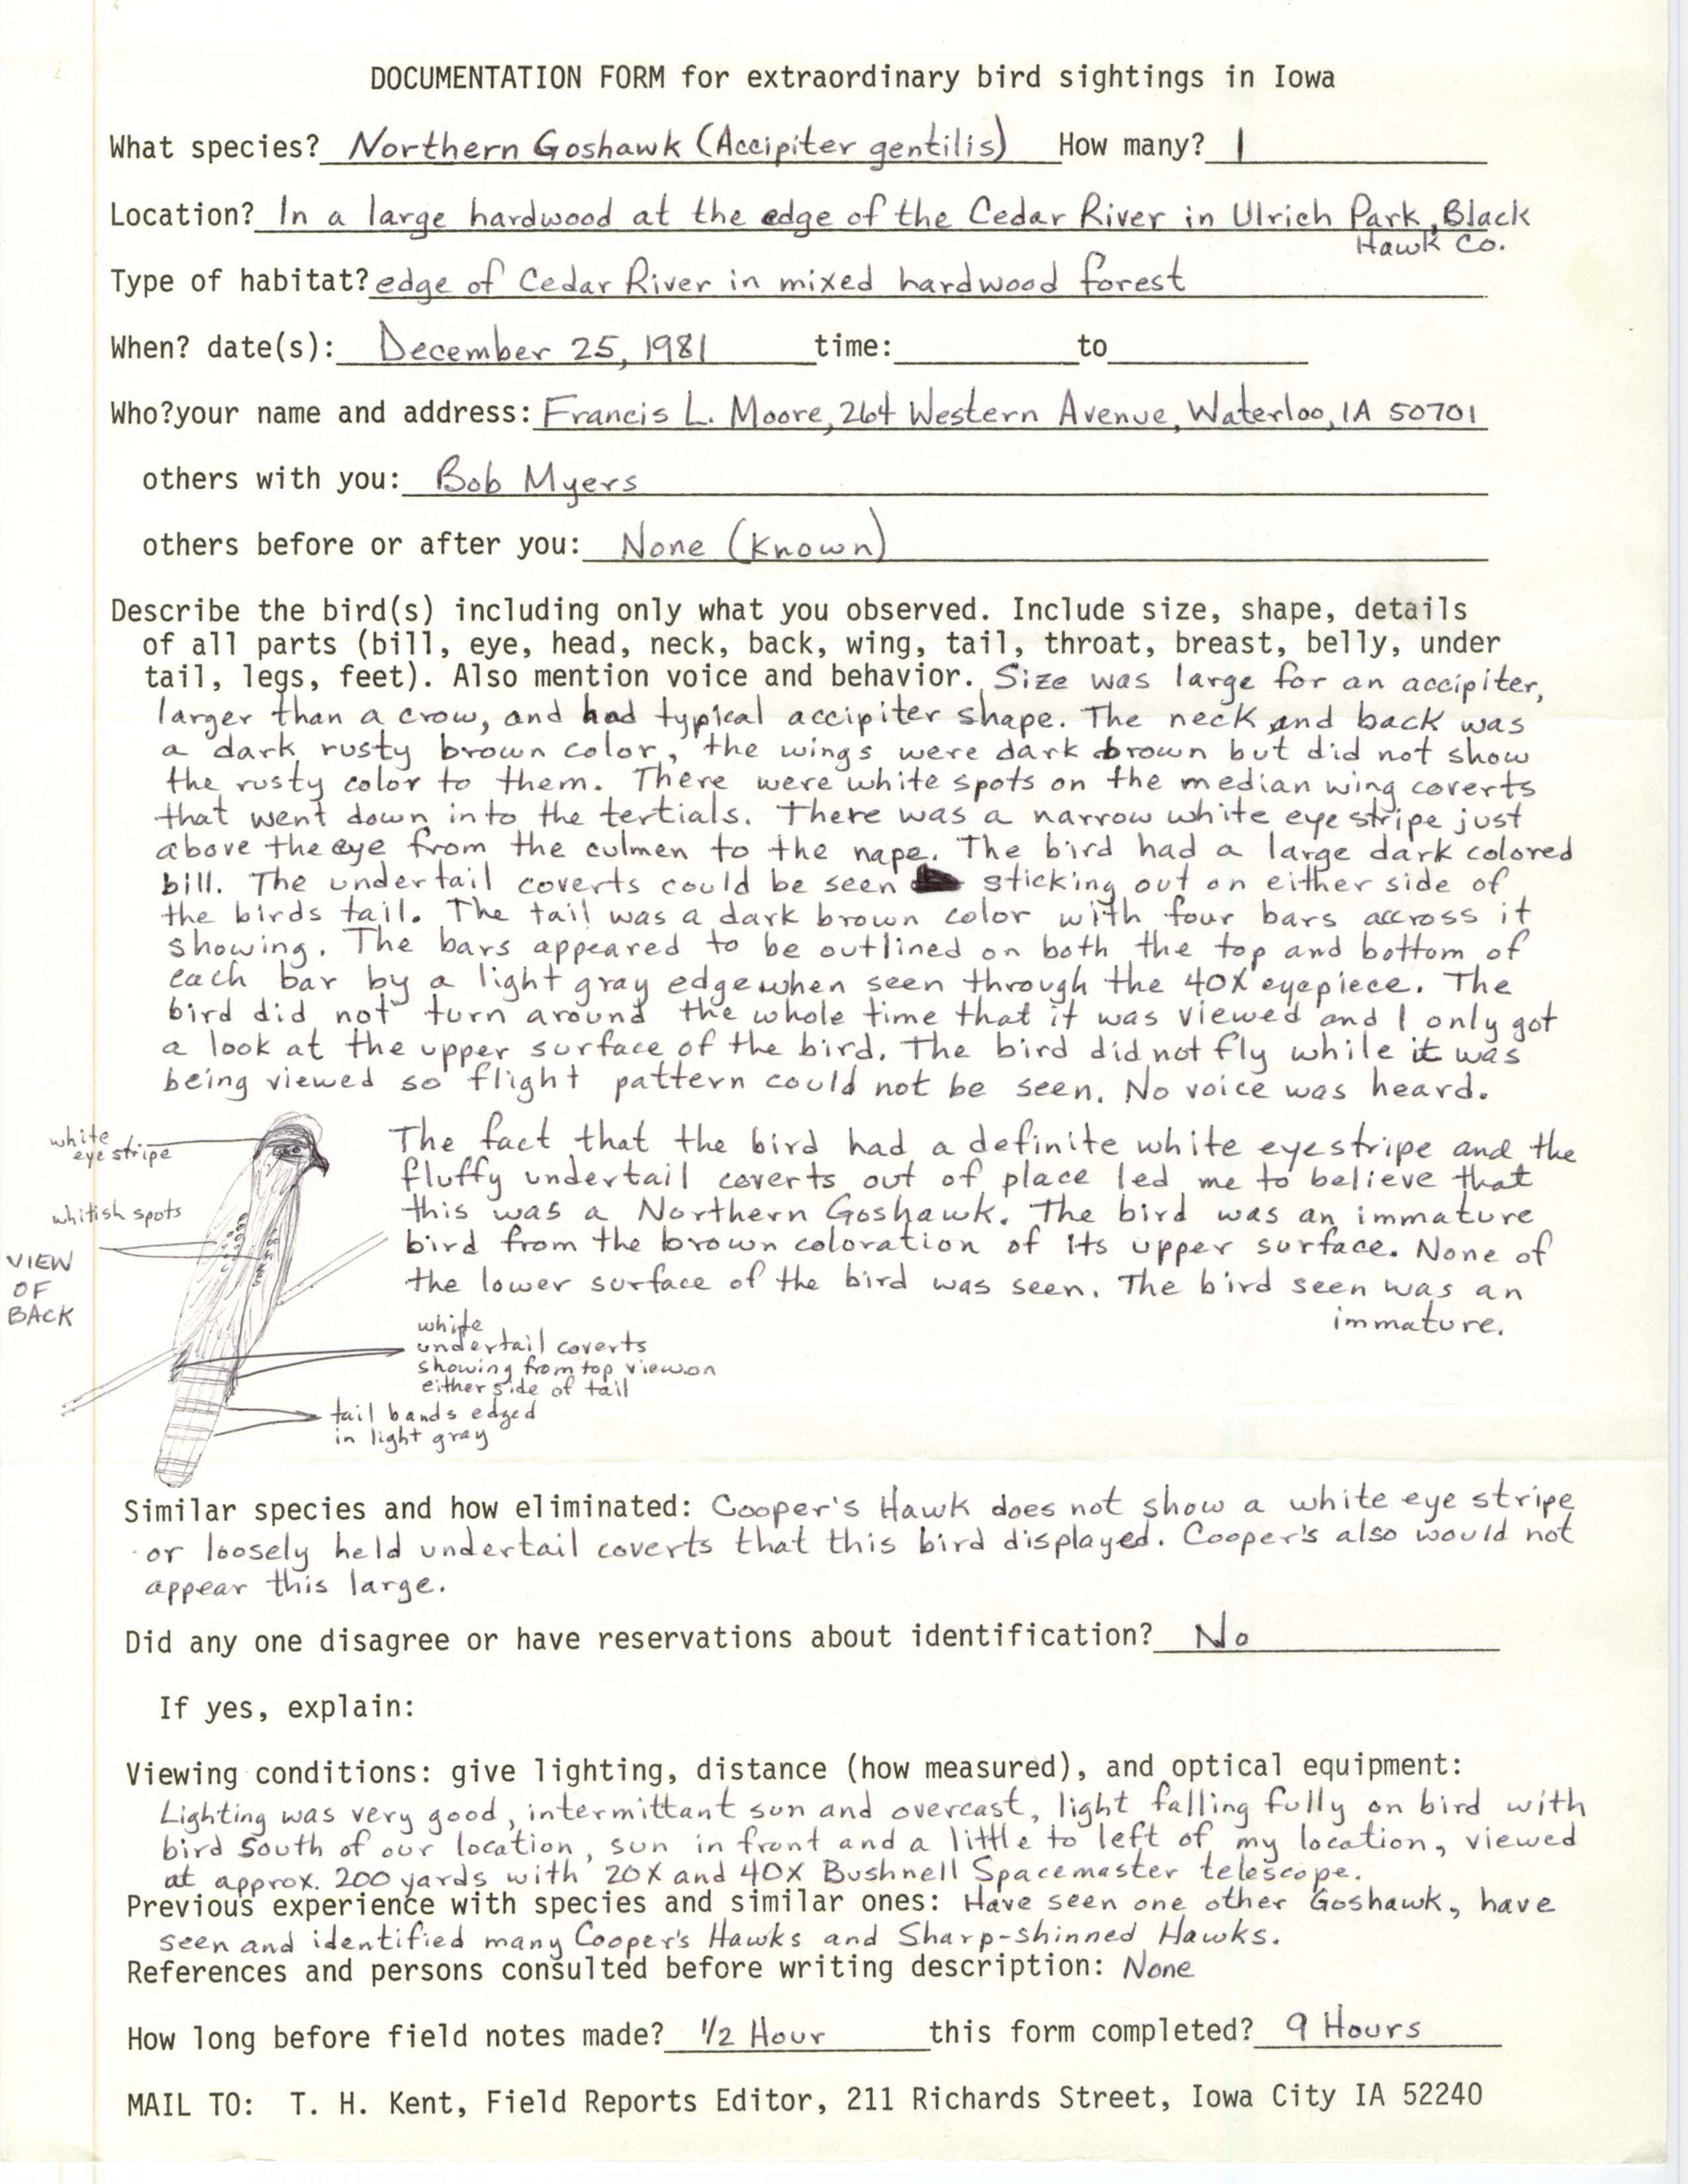 Rare bird documentation form for Northern Goshawk at Ulrich Park, 1981